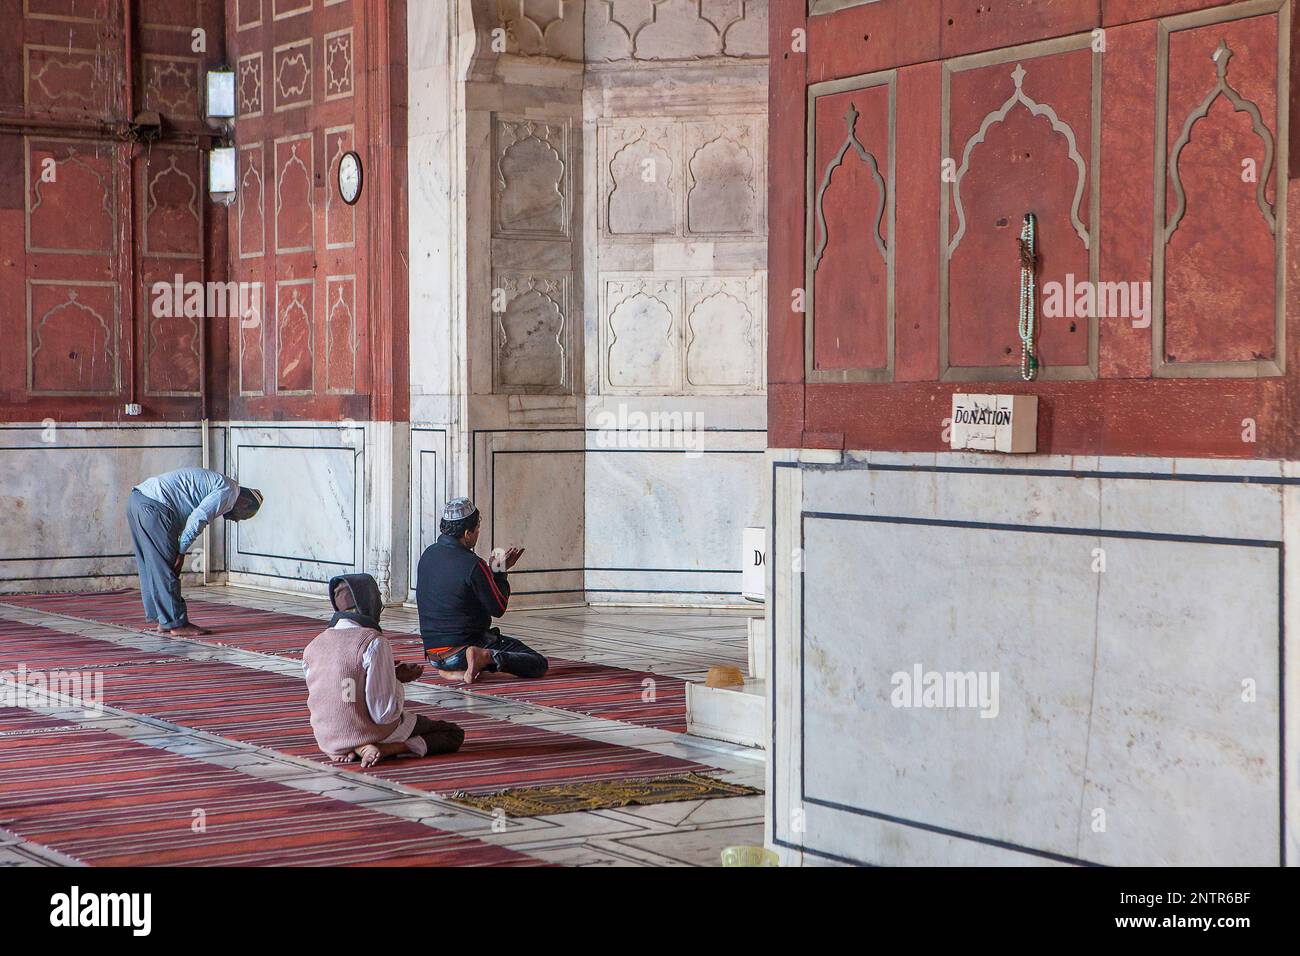 Prayer room, interior of Jama Masjid mosque, Delhi, India Stock Photo